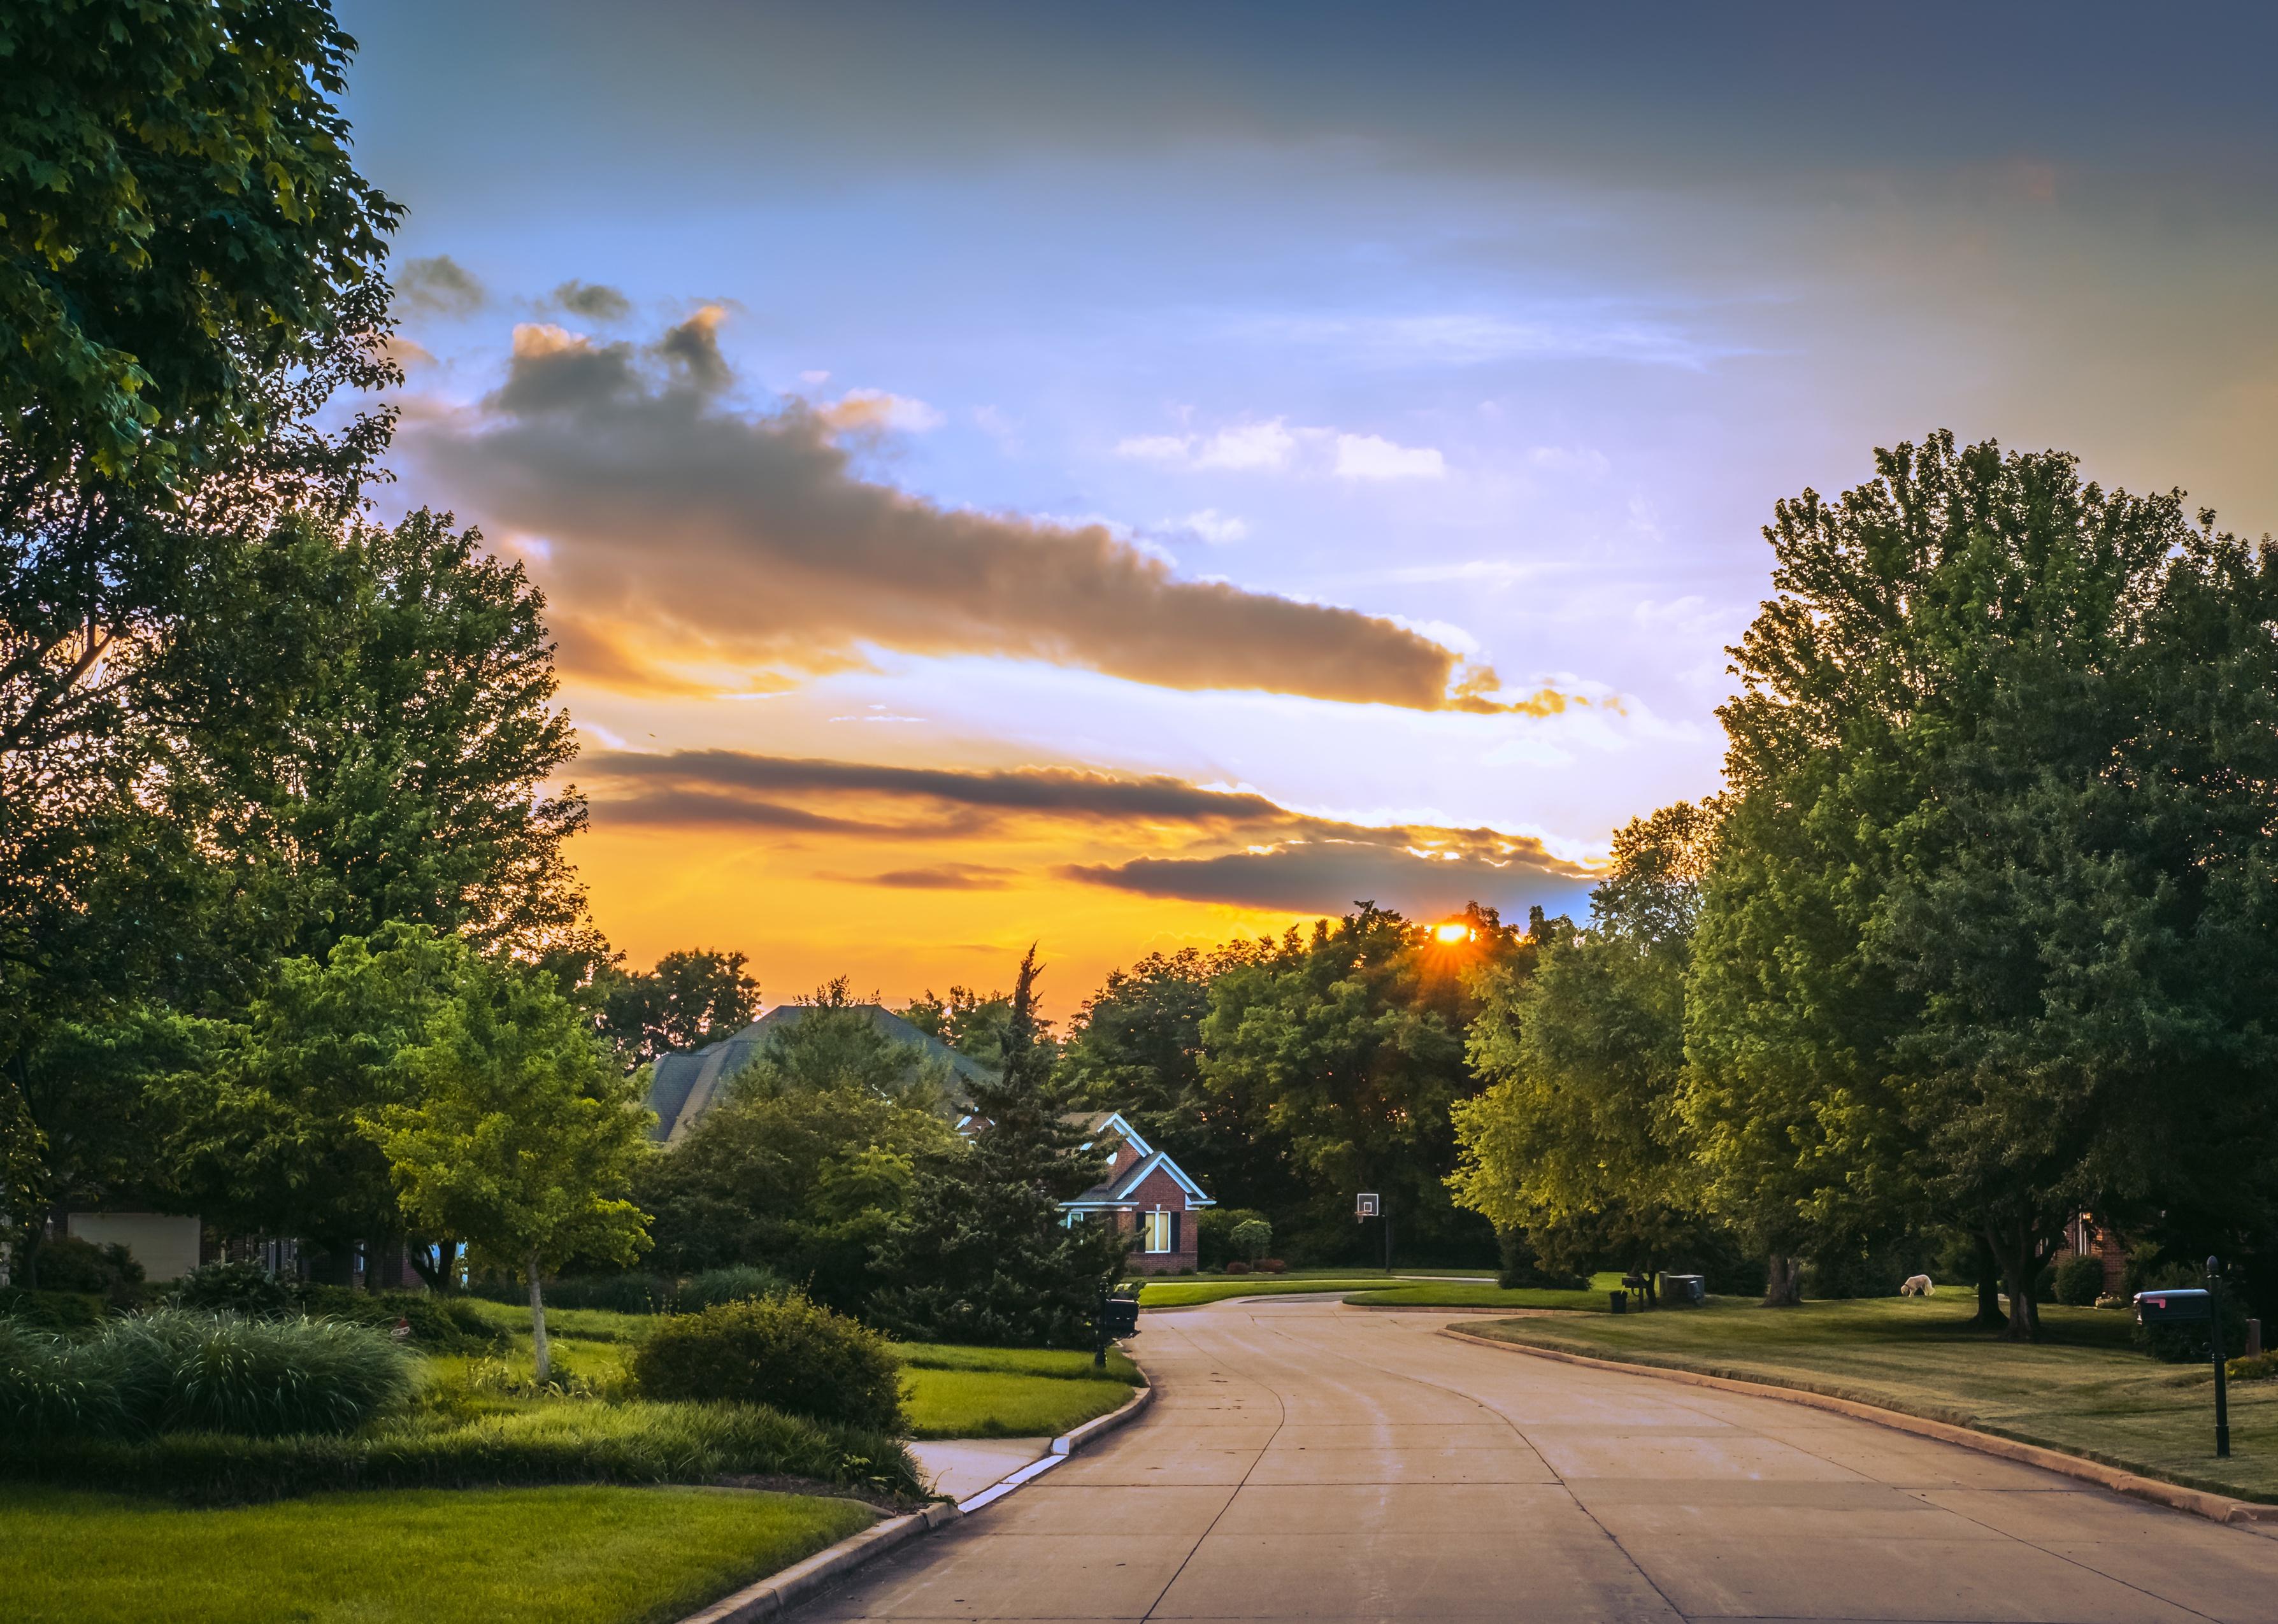 View of street in suburban neighborhood during sunset.